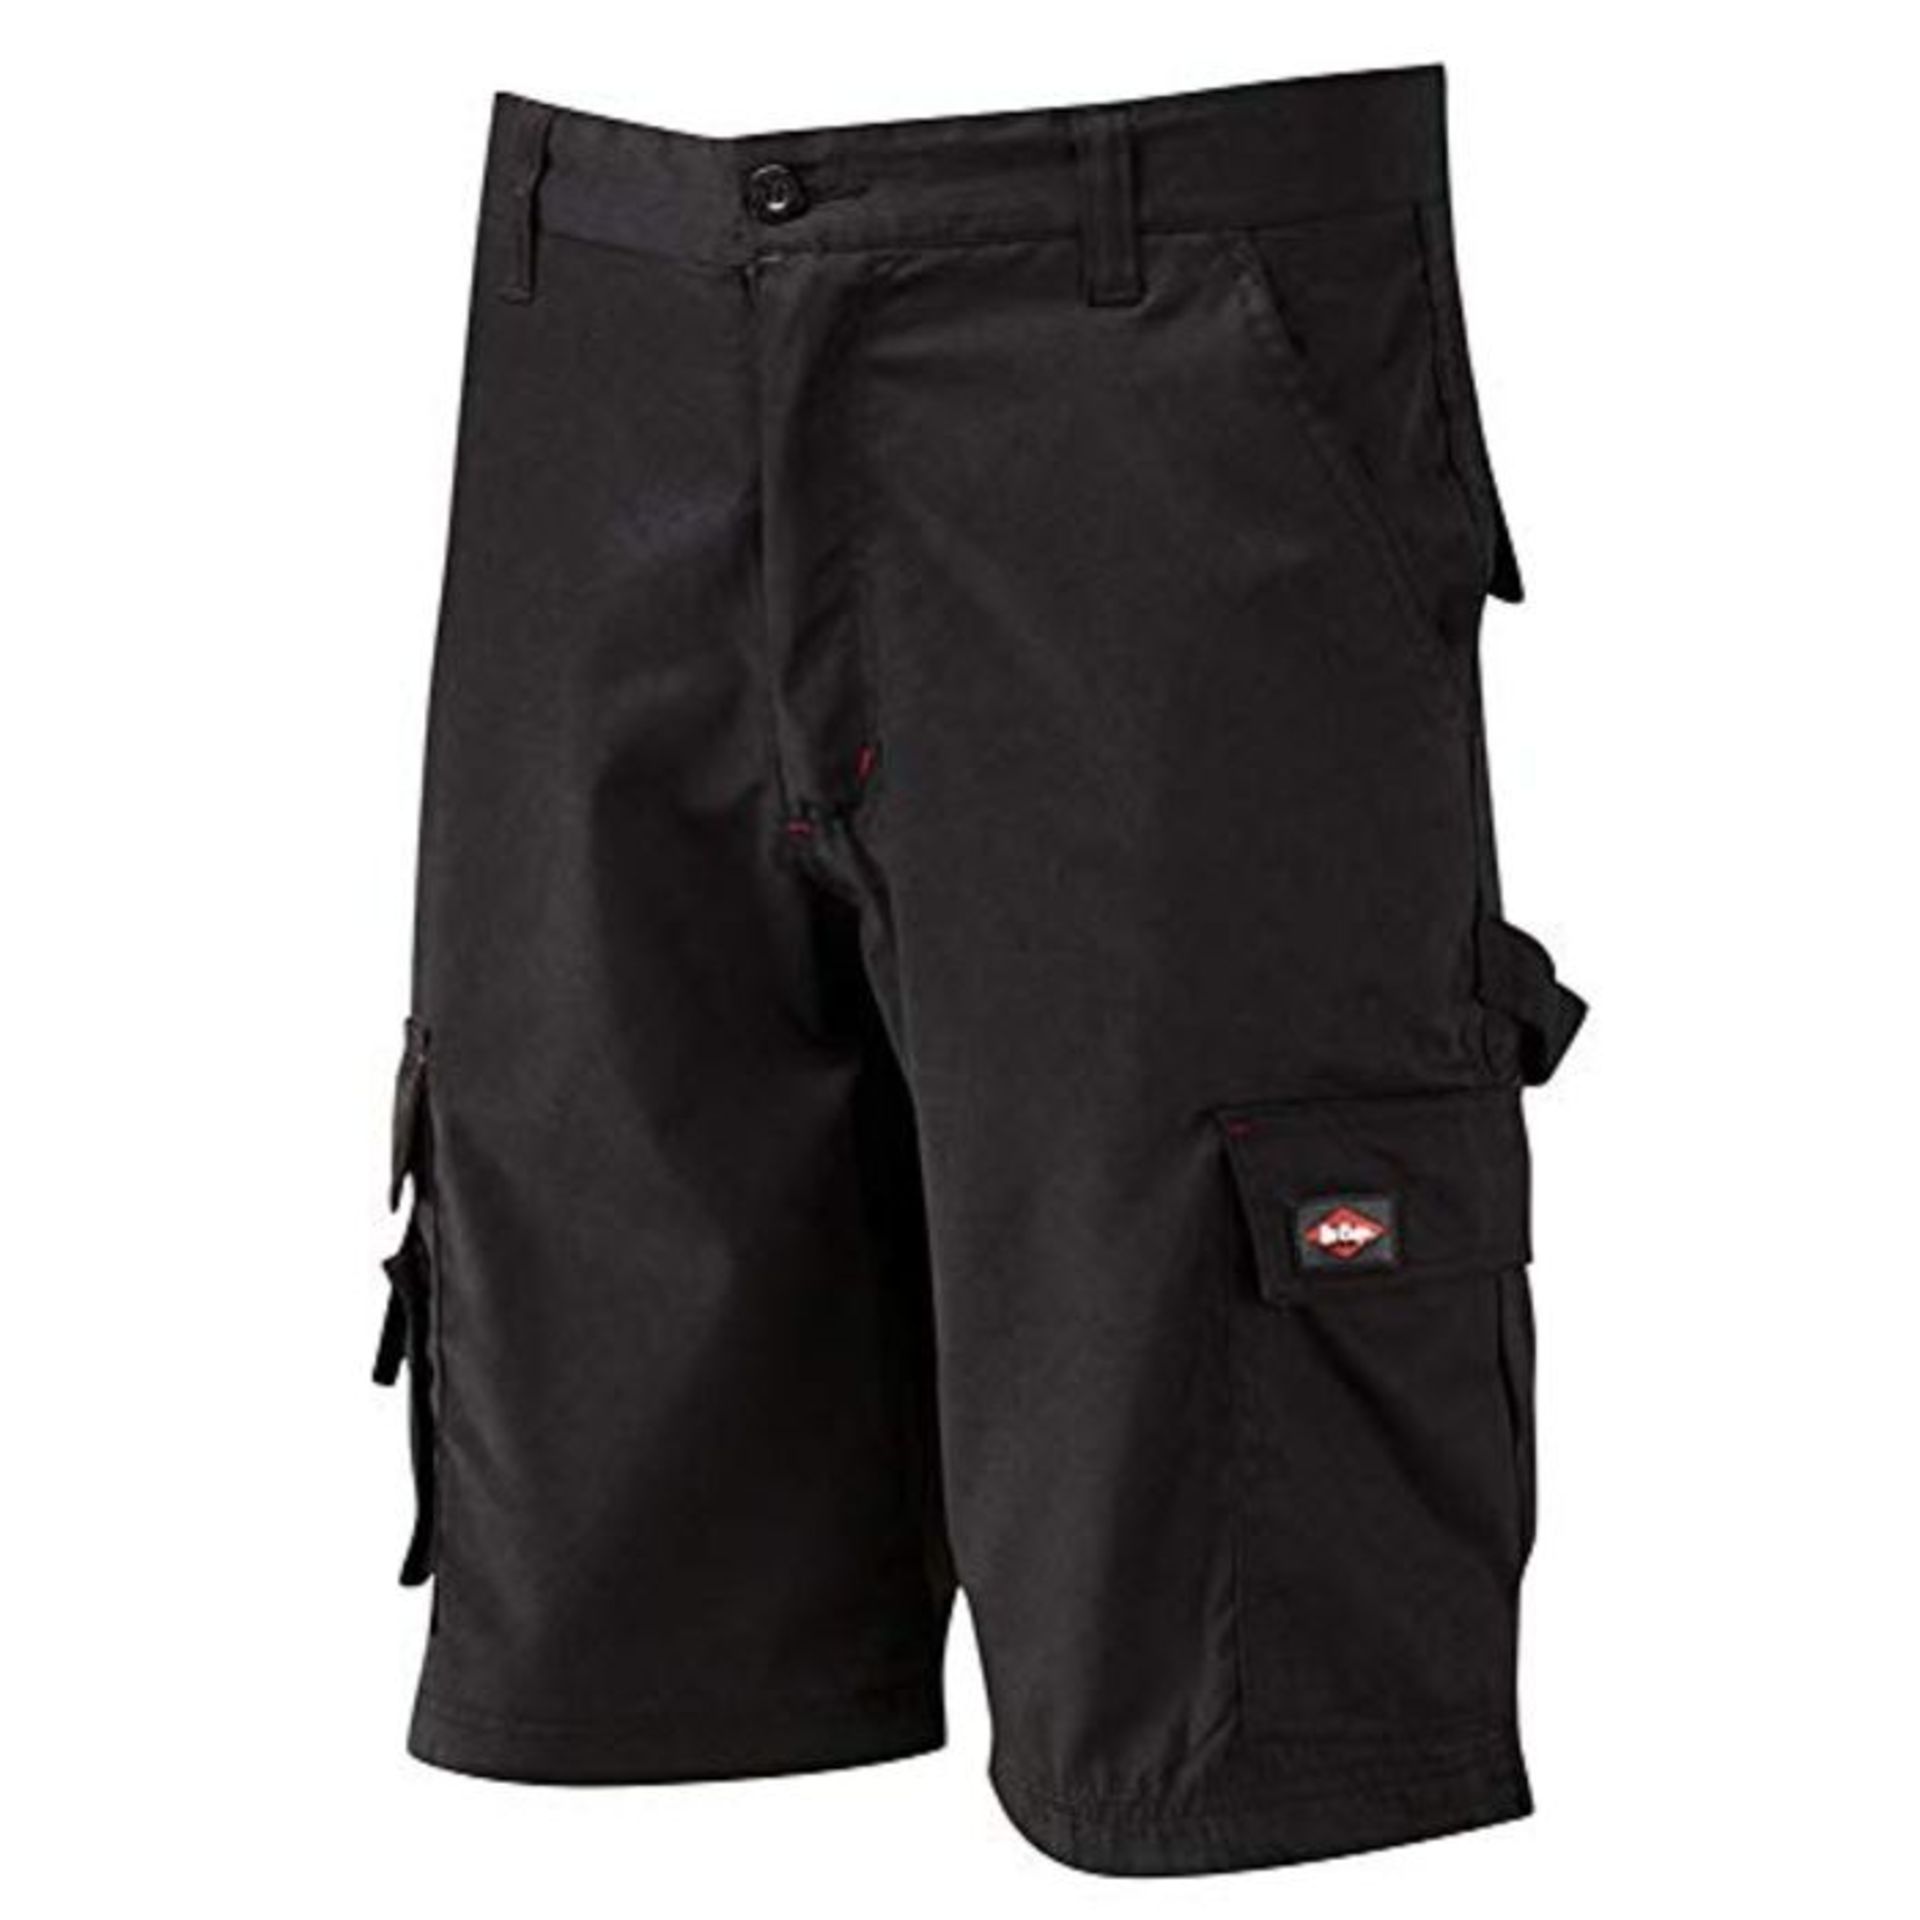 Lee Cooper LCSHO806 Mens Multi Pocket Work Safety Pants Cargo Shorts, Black, Size 32